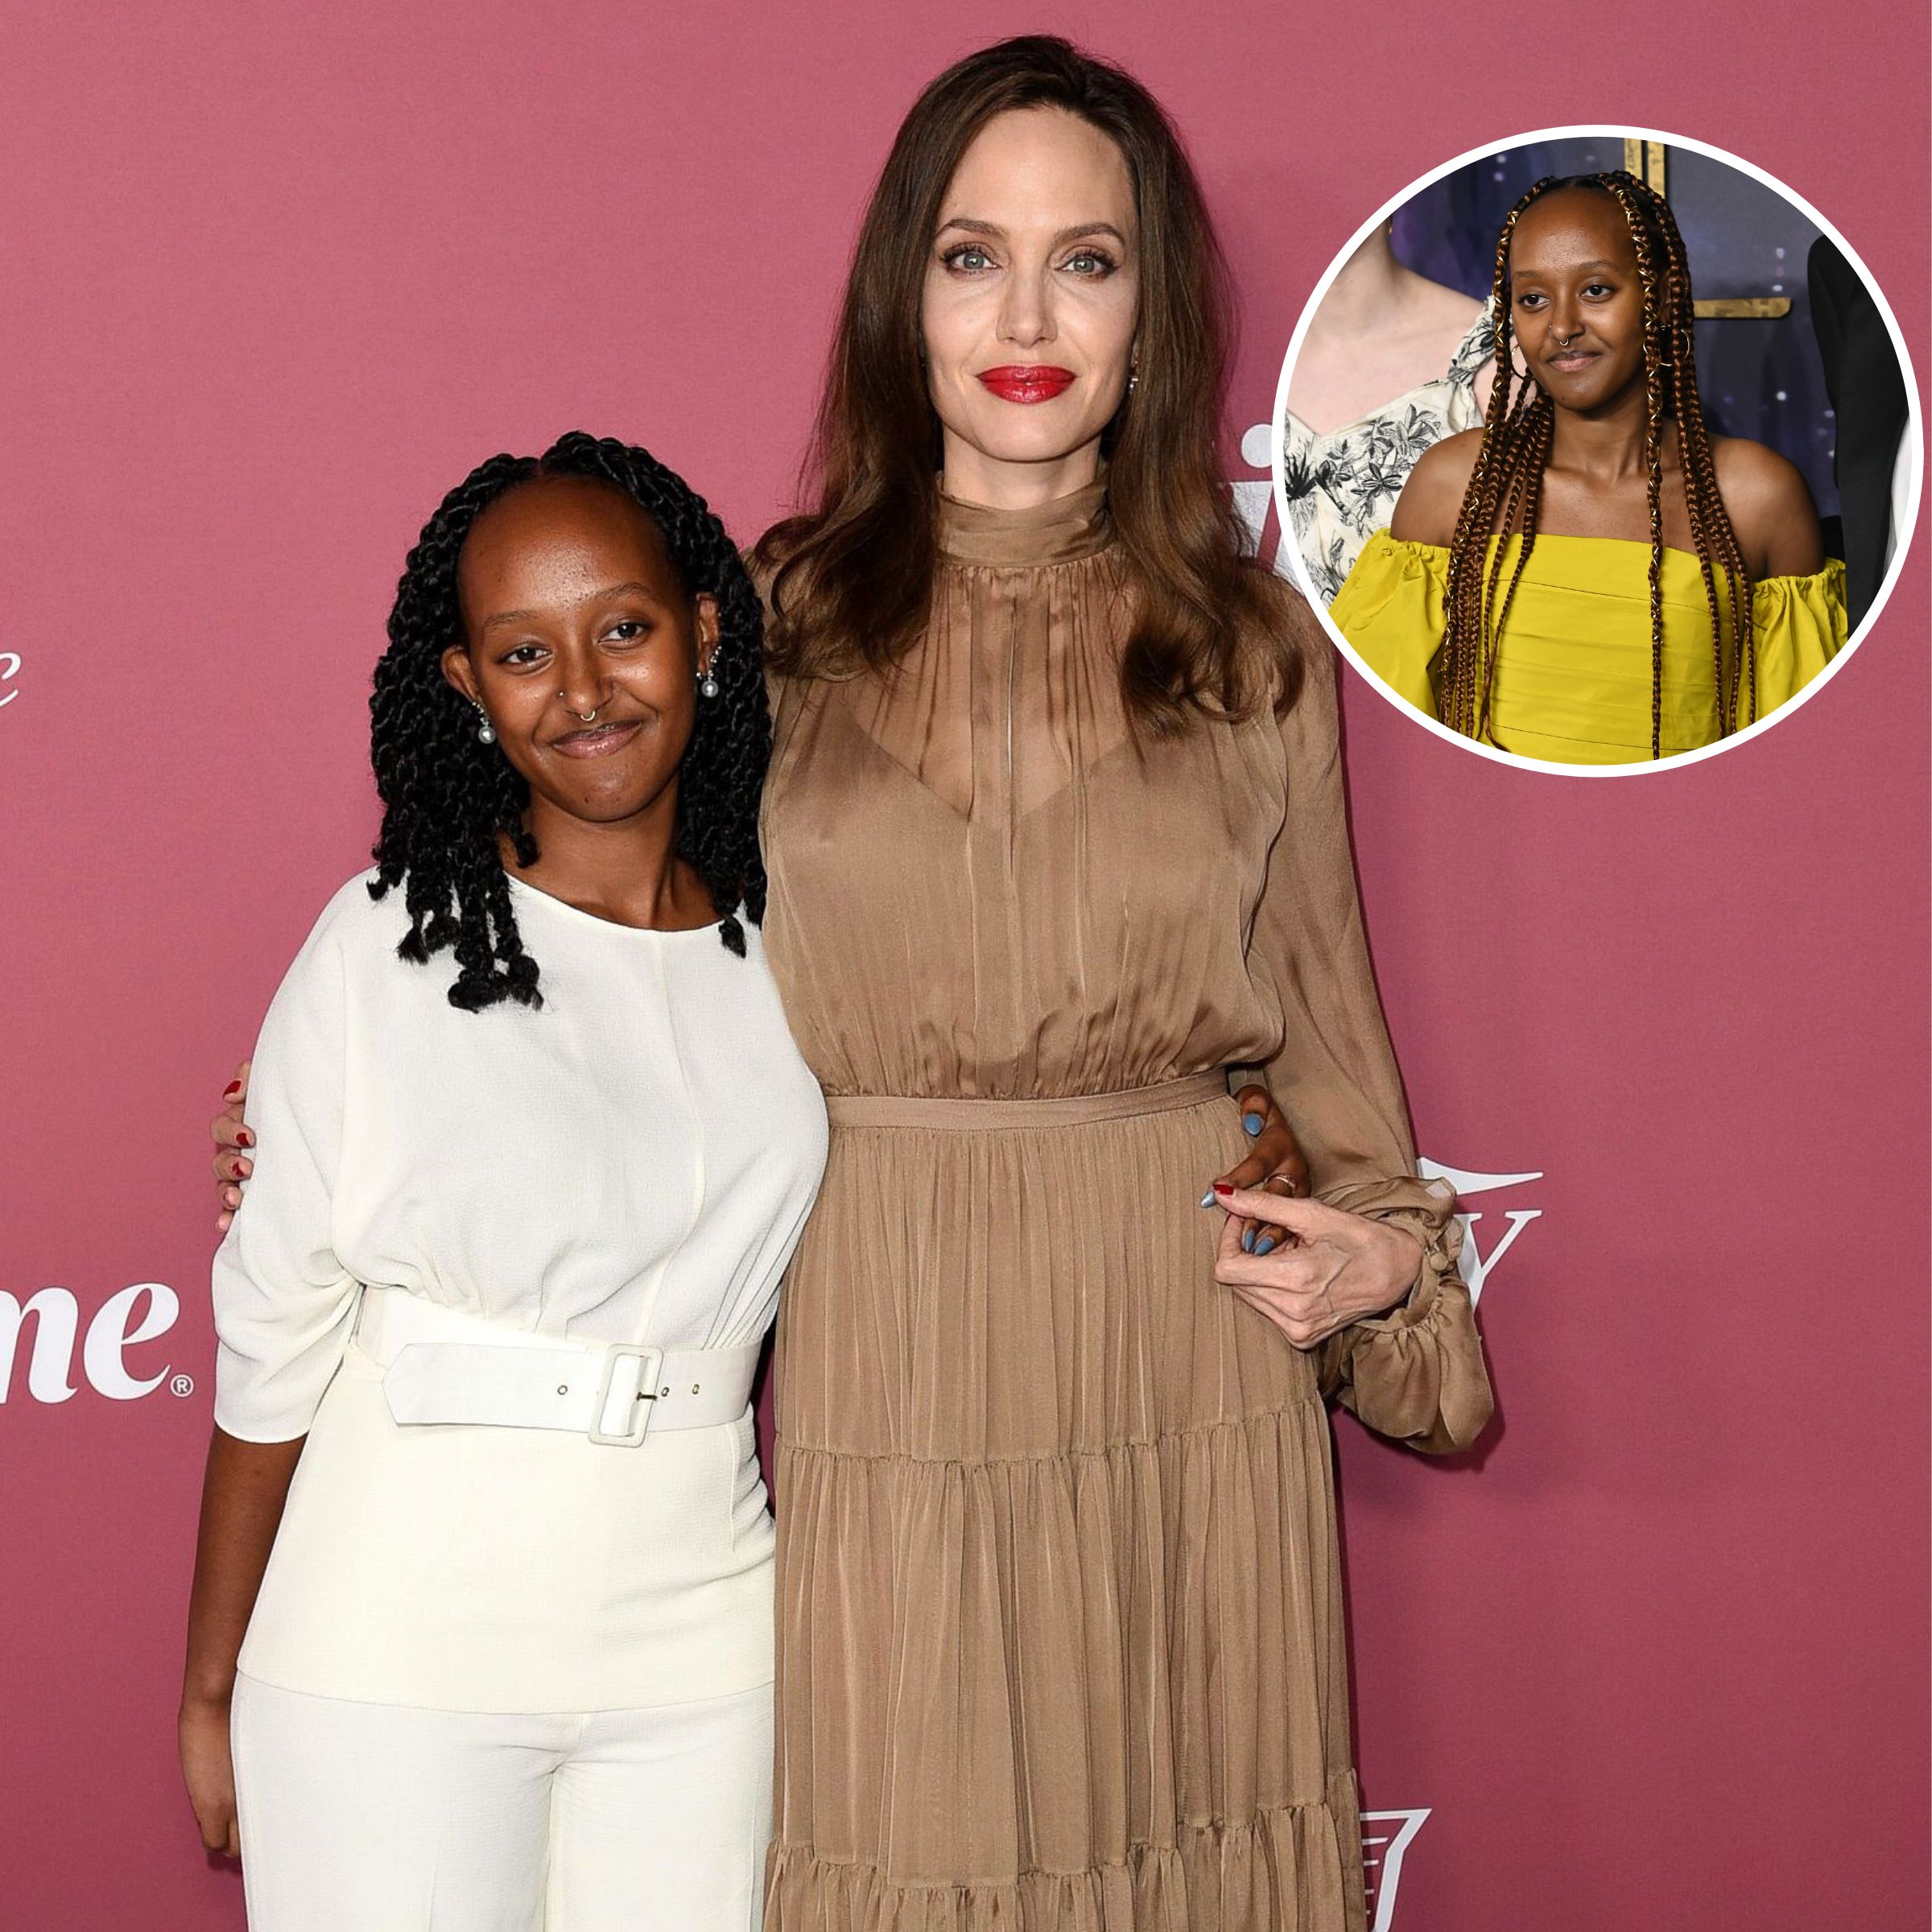 Engelina Joly Sex - Angelina Jolie and Brad Pitt's Daughter Zahara: Photos of the Teen